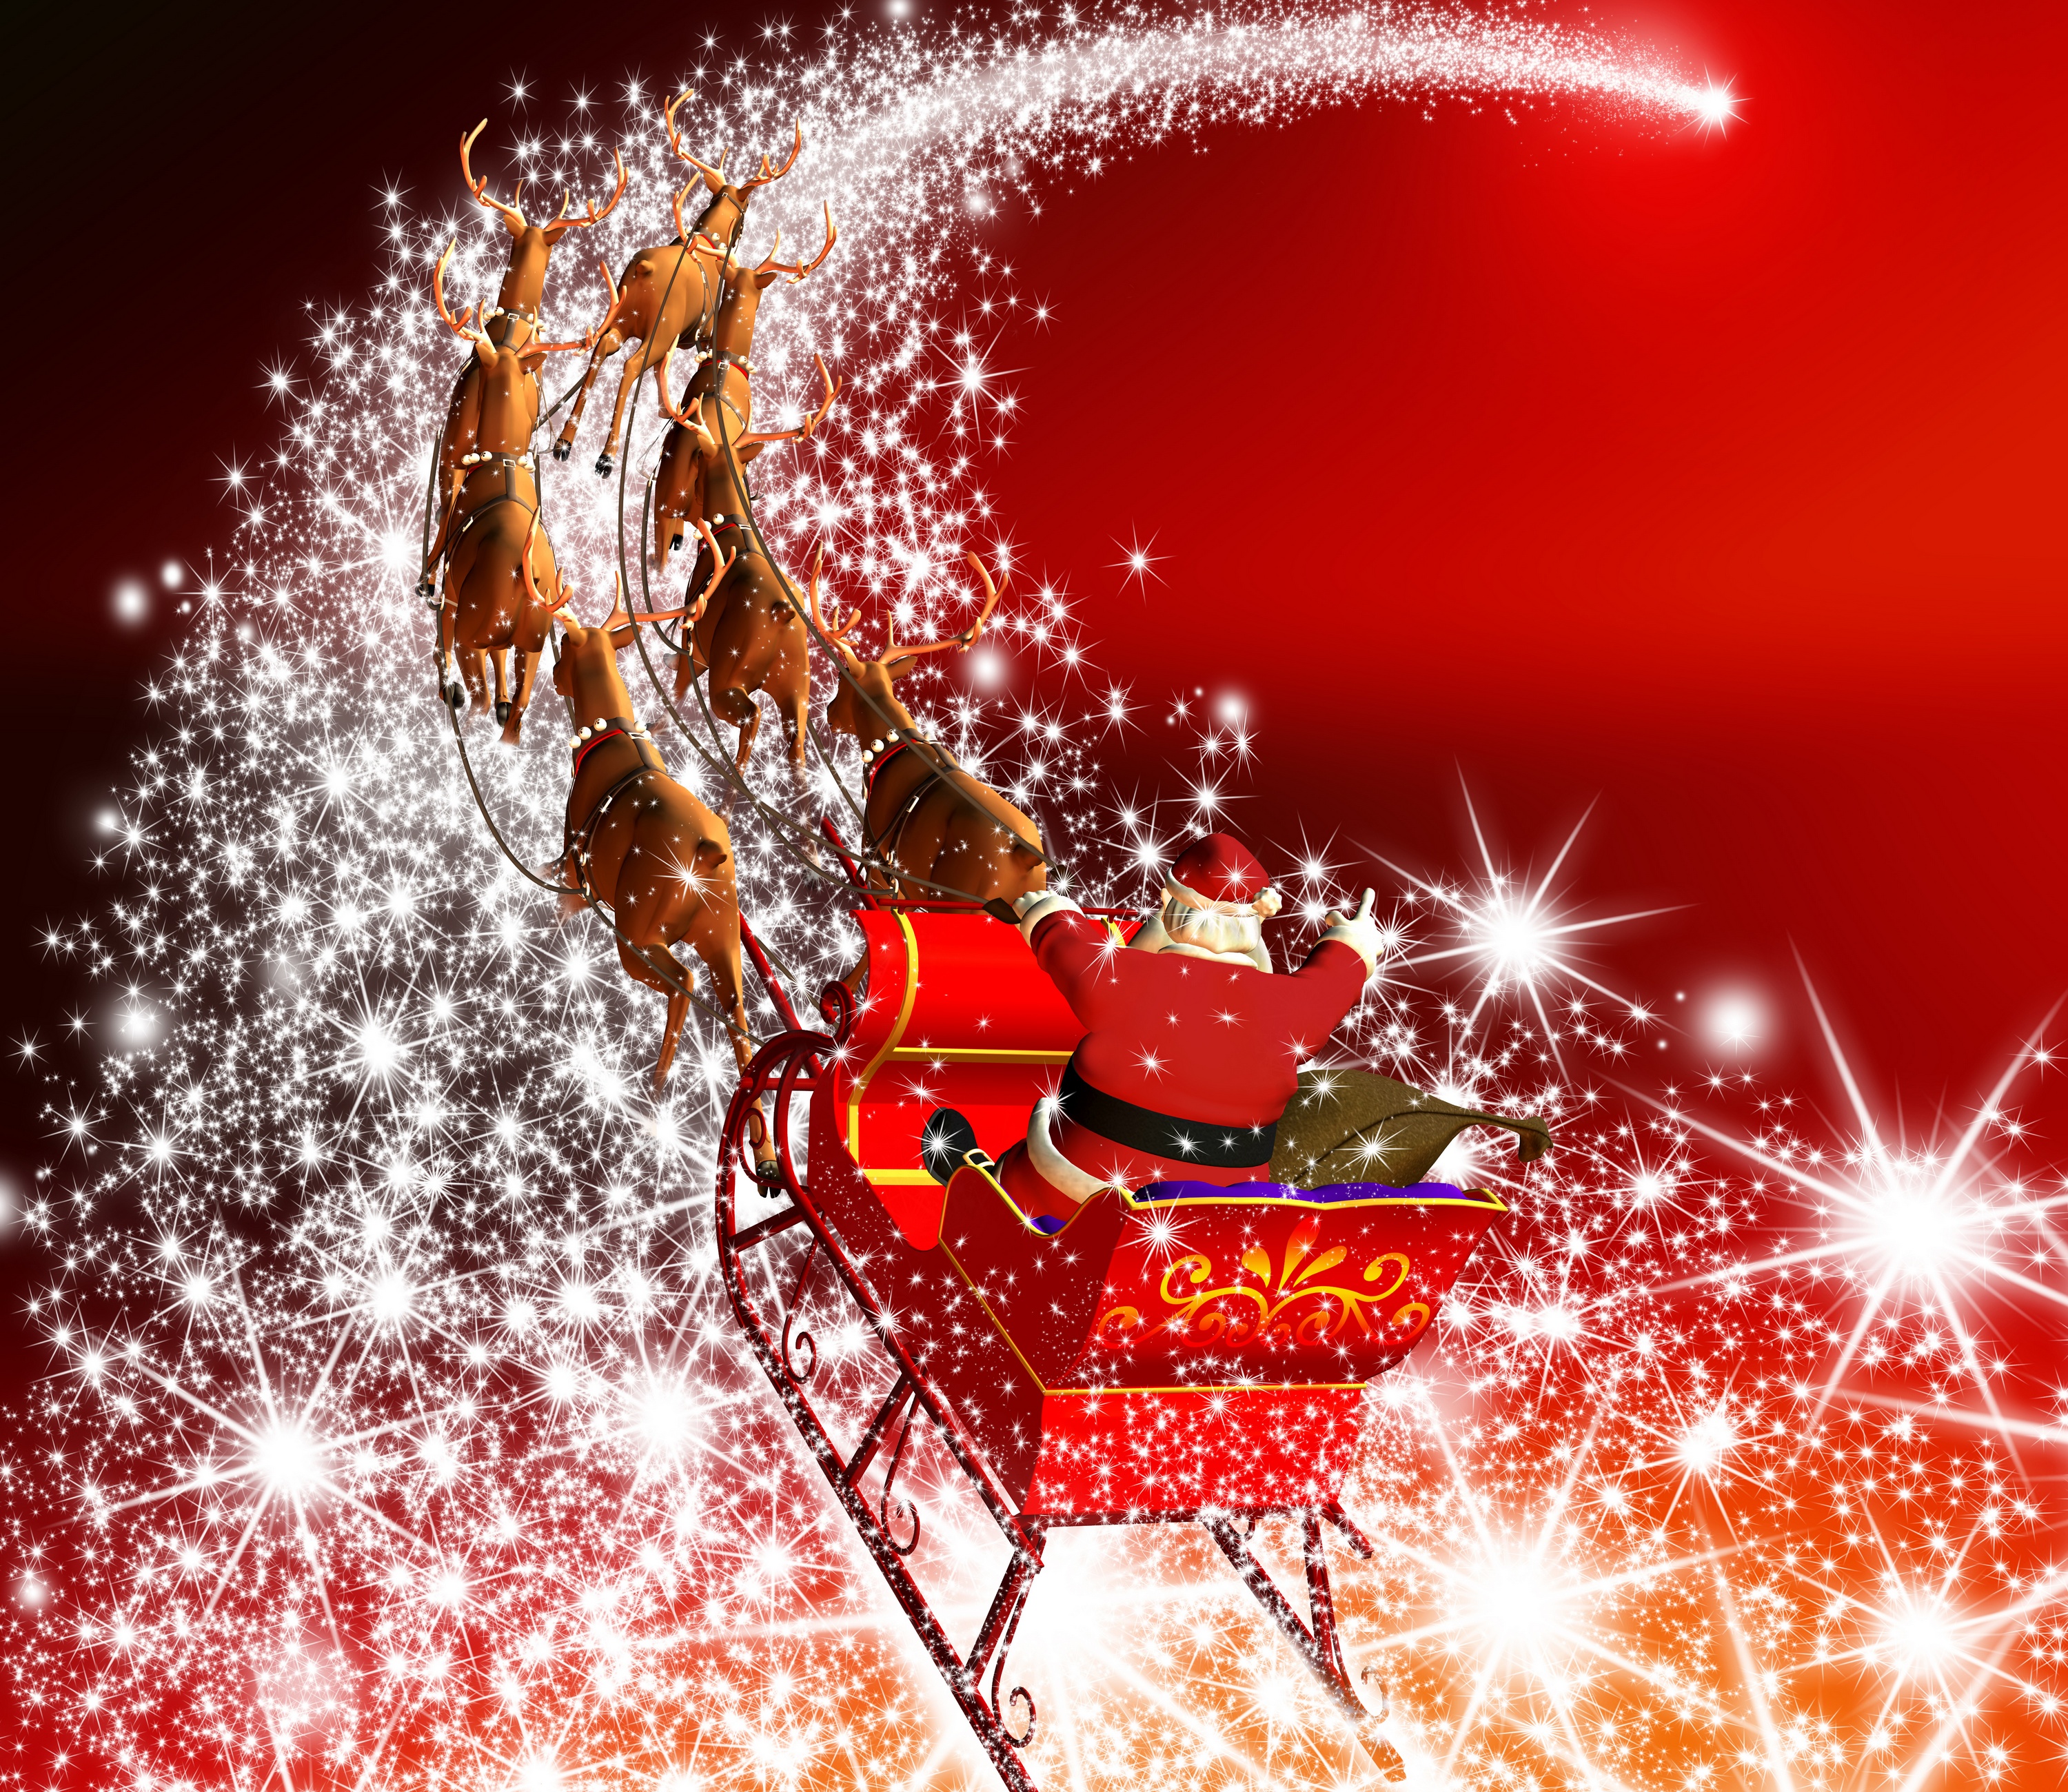 https://decisionsformyfamily.files.wordpress.com/2014/12/christmas-magic-santa-reindeer-sleigh.jpg